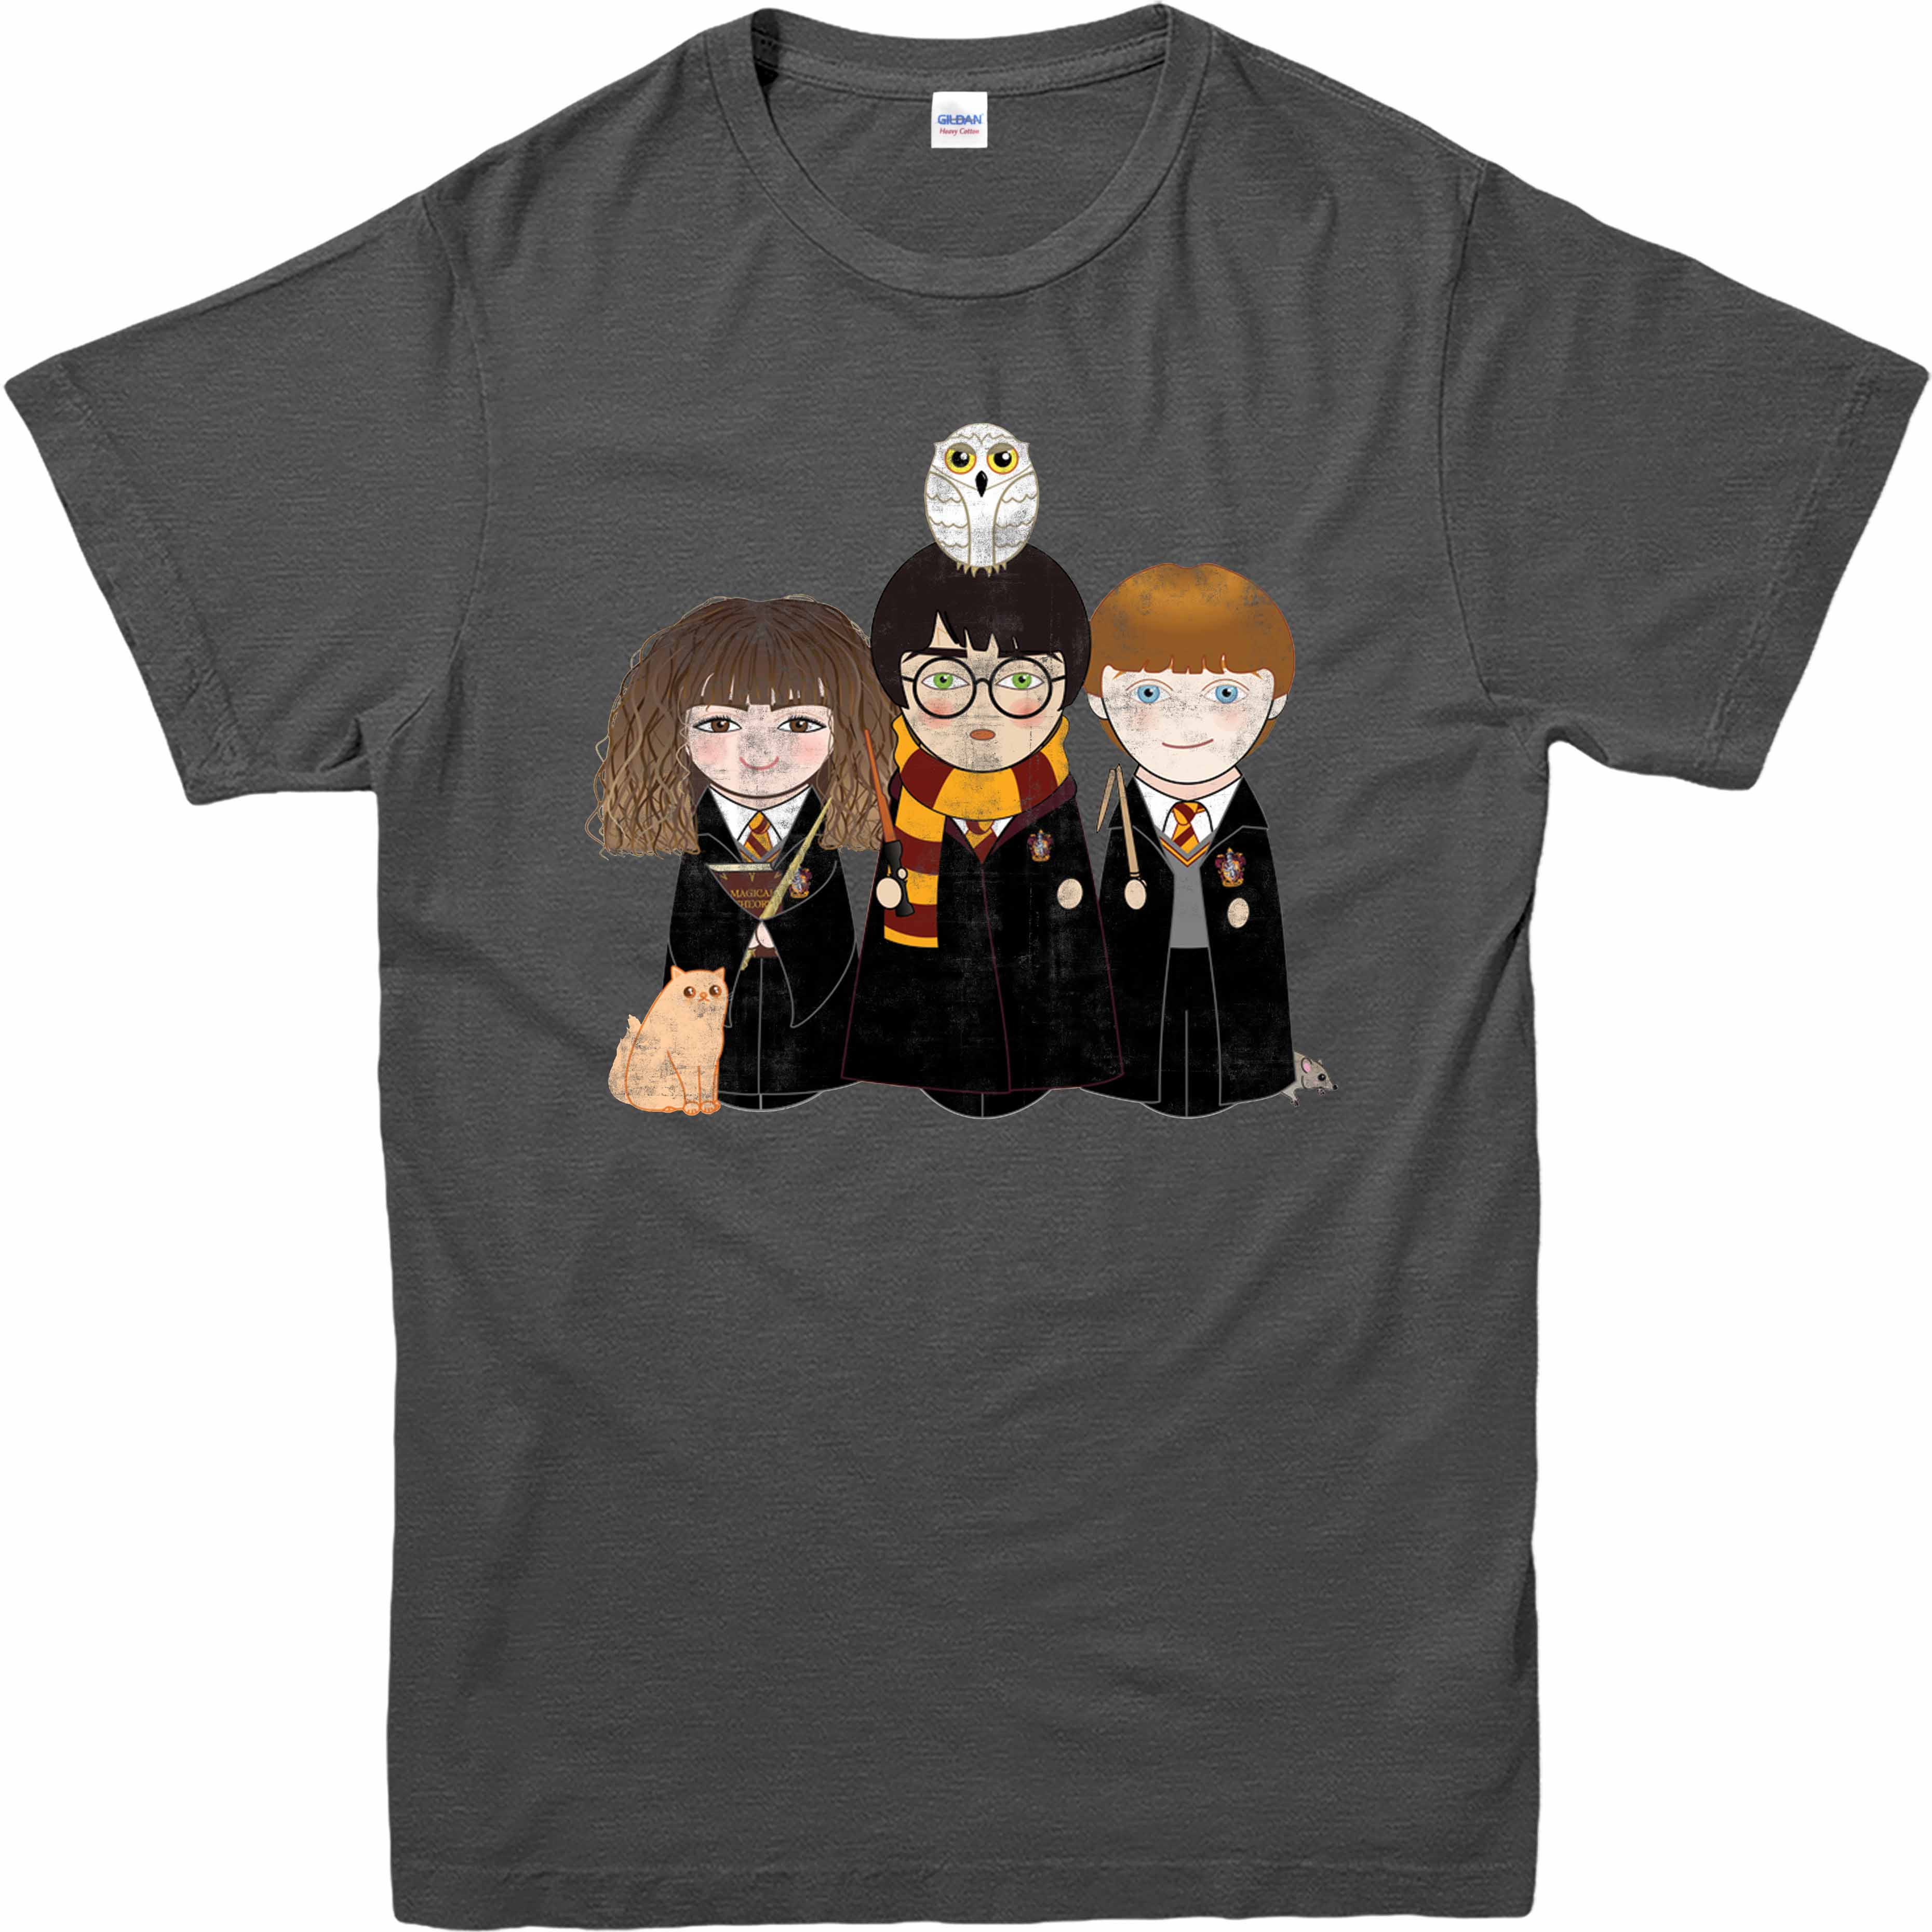 Harry Potter T Shirt Design Ideas - Design Talk